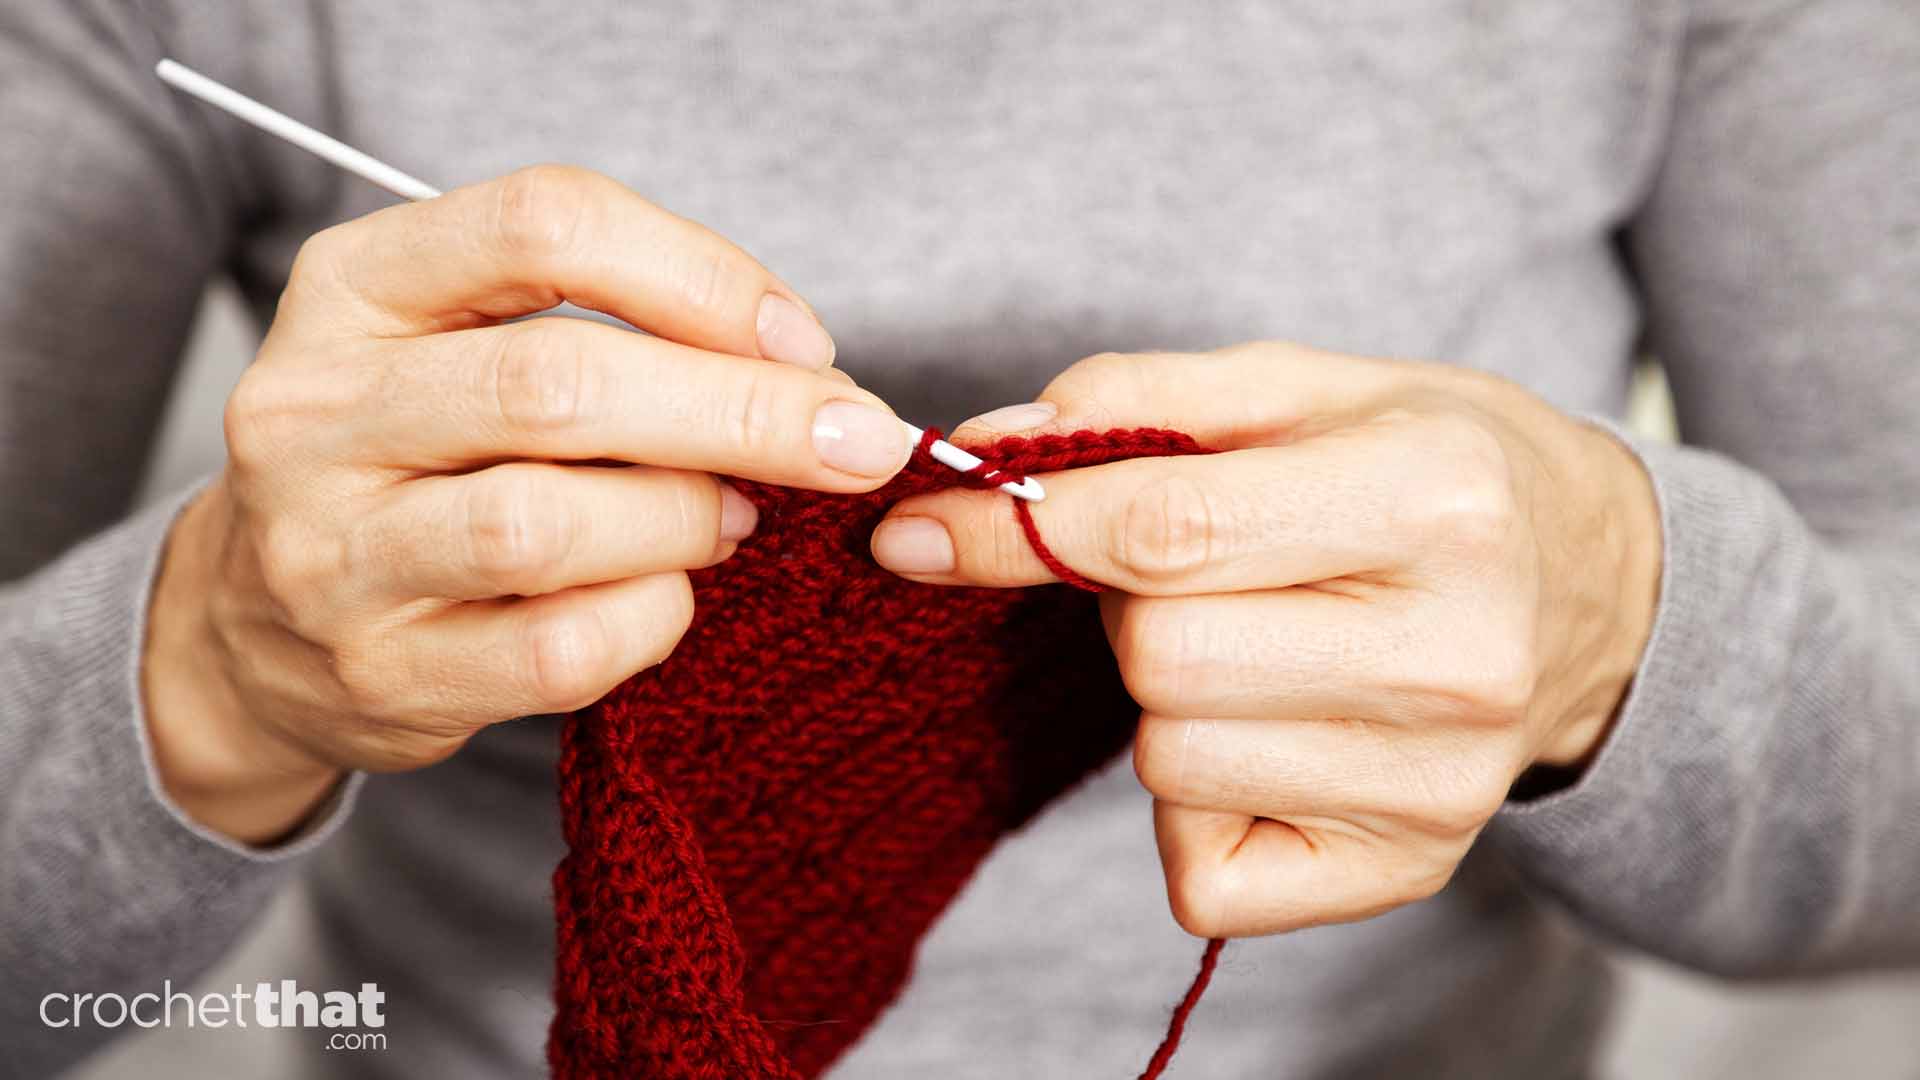 Best Crochet Hooks For Arthritic Hands (Reduce Pain While Crocheting) 